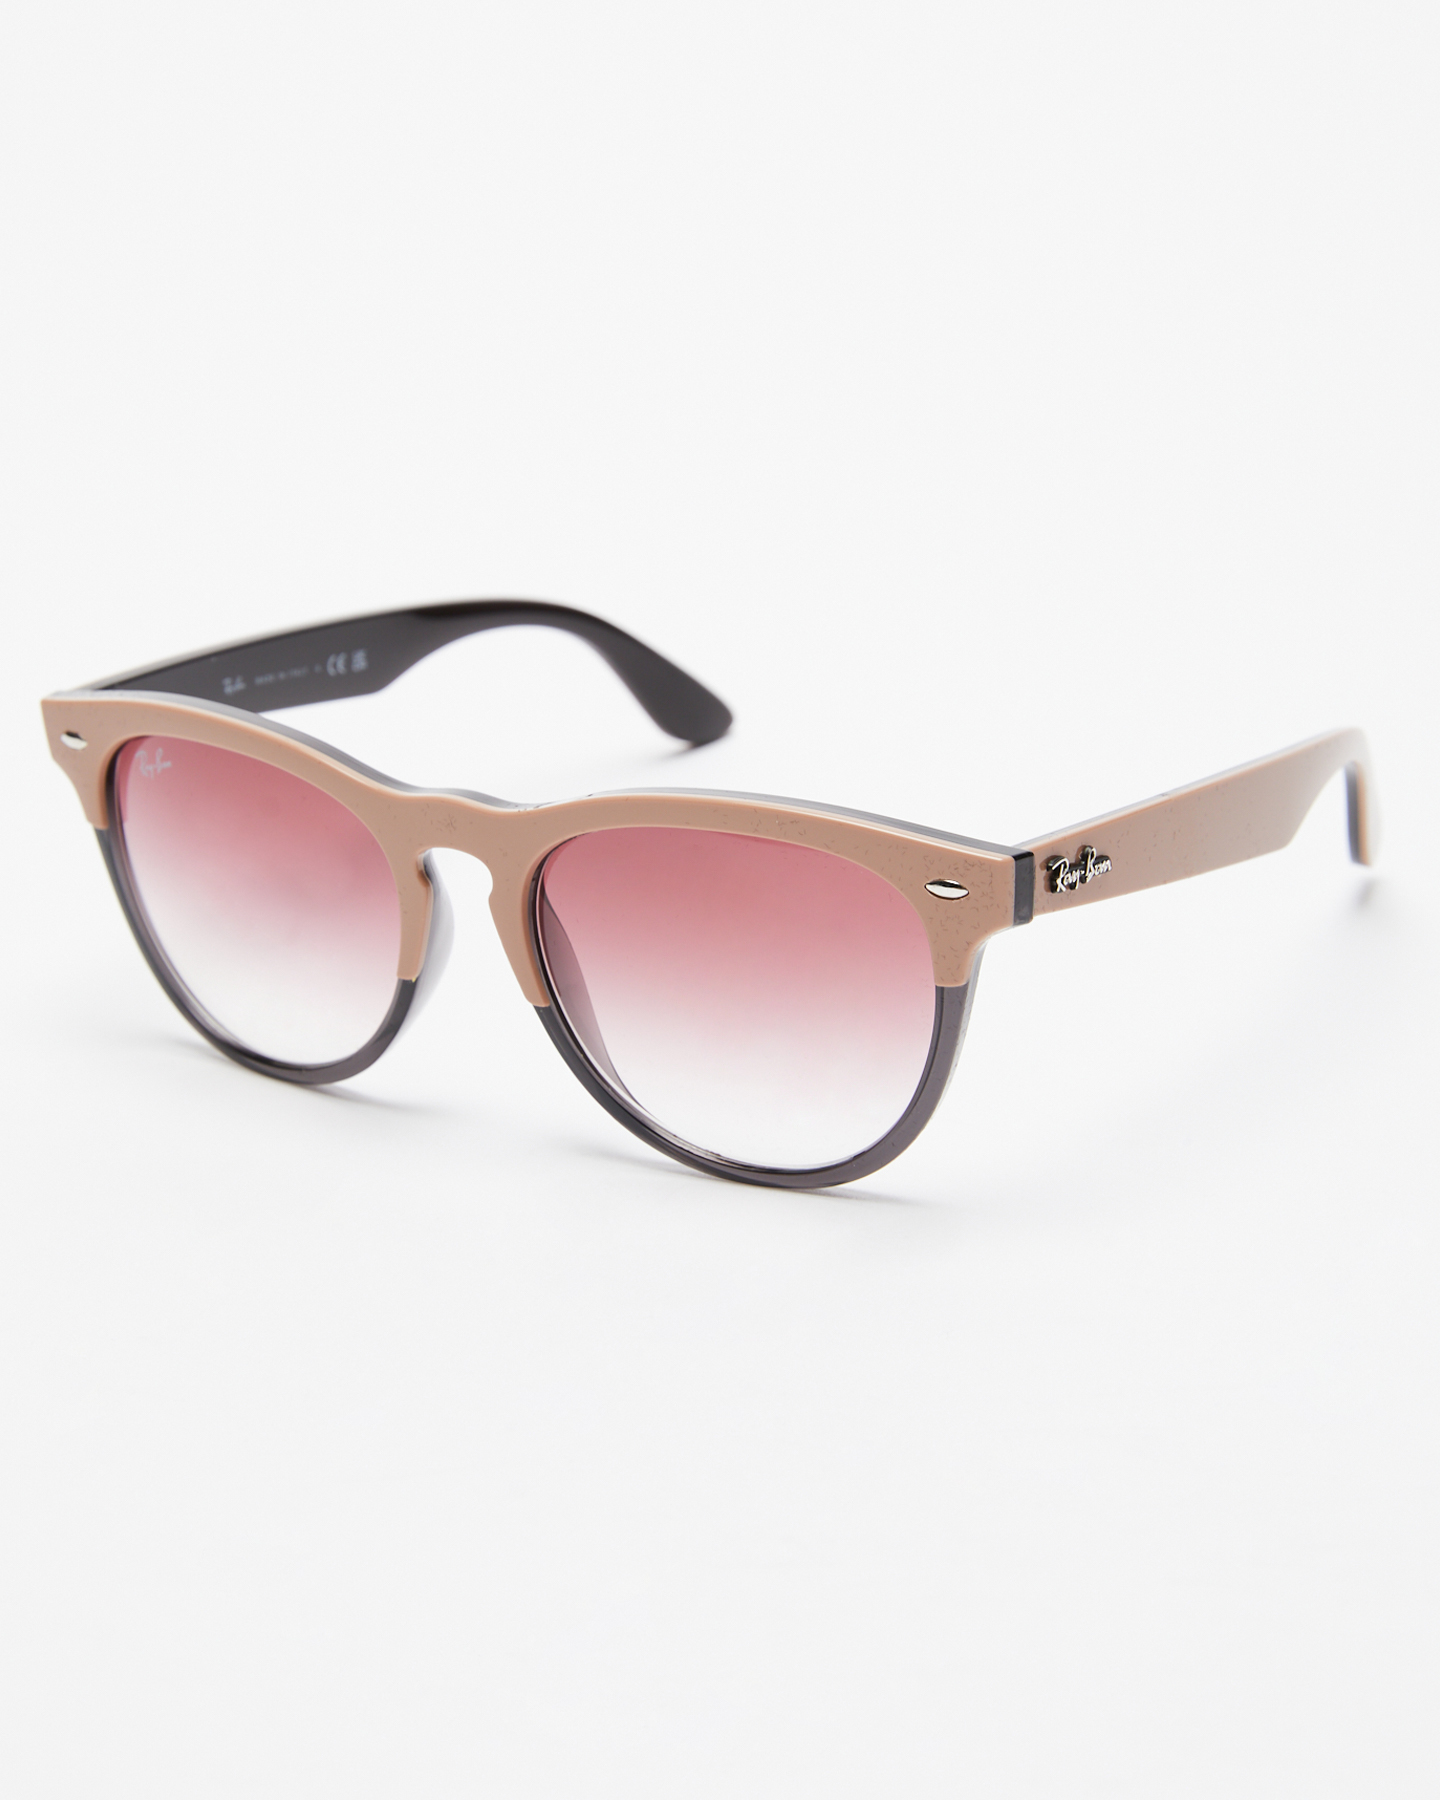 Ray-Ban Iris Sunglasses - Beige Clear Grey | SurfStitch